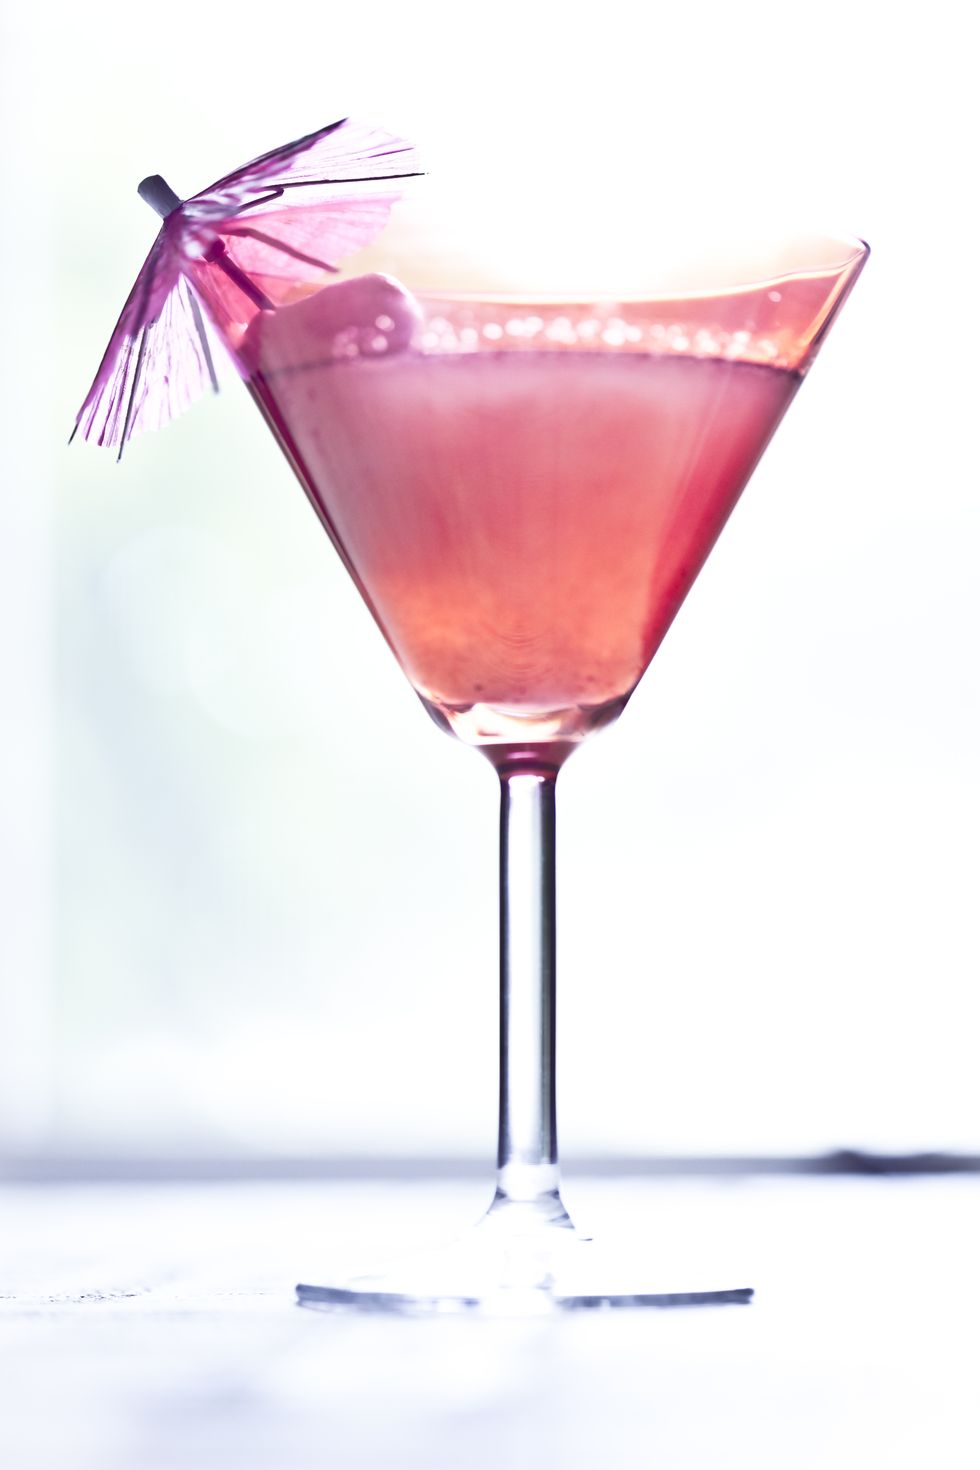 Drink, Martini glass, Alcoholic beverage, Cocktail, Non-alcoholic beverage, Classic cocktail, Woo woo, Distilled beverage, Martini, Pink lady, 